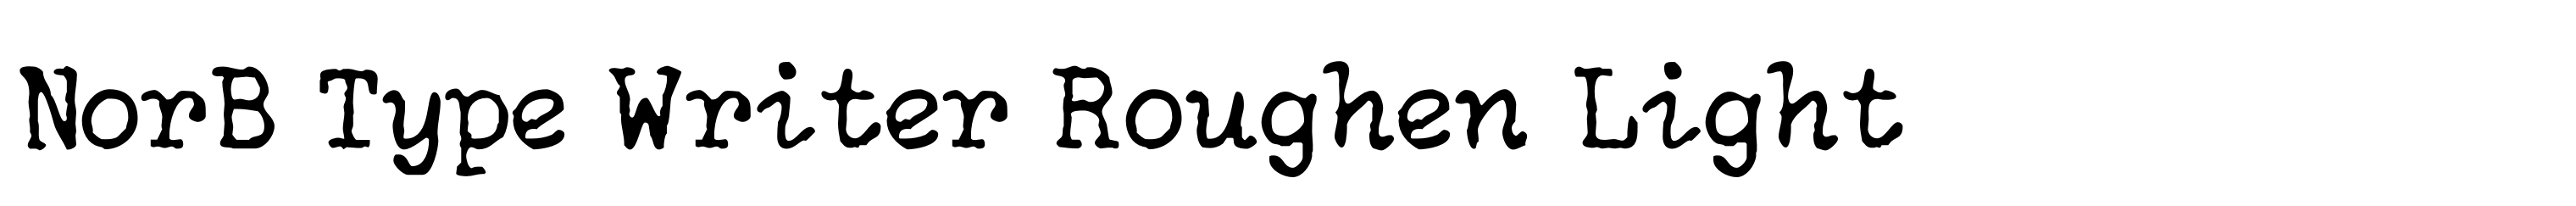 NorB Type Writer Roughen Light